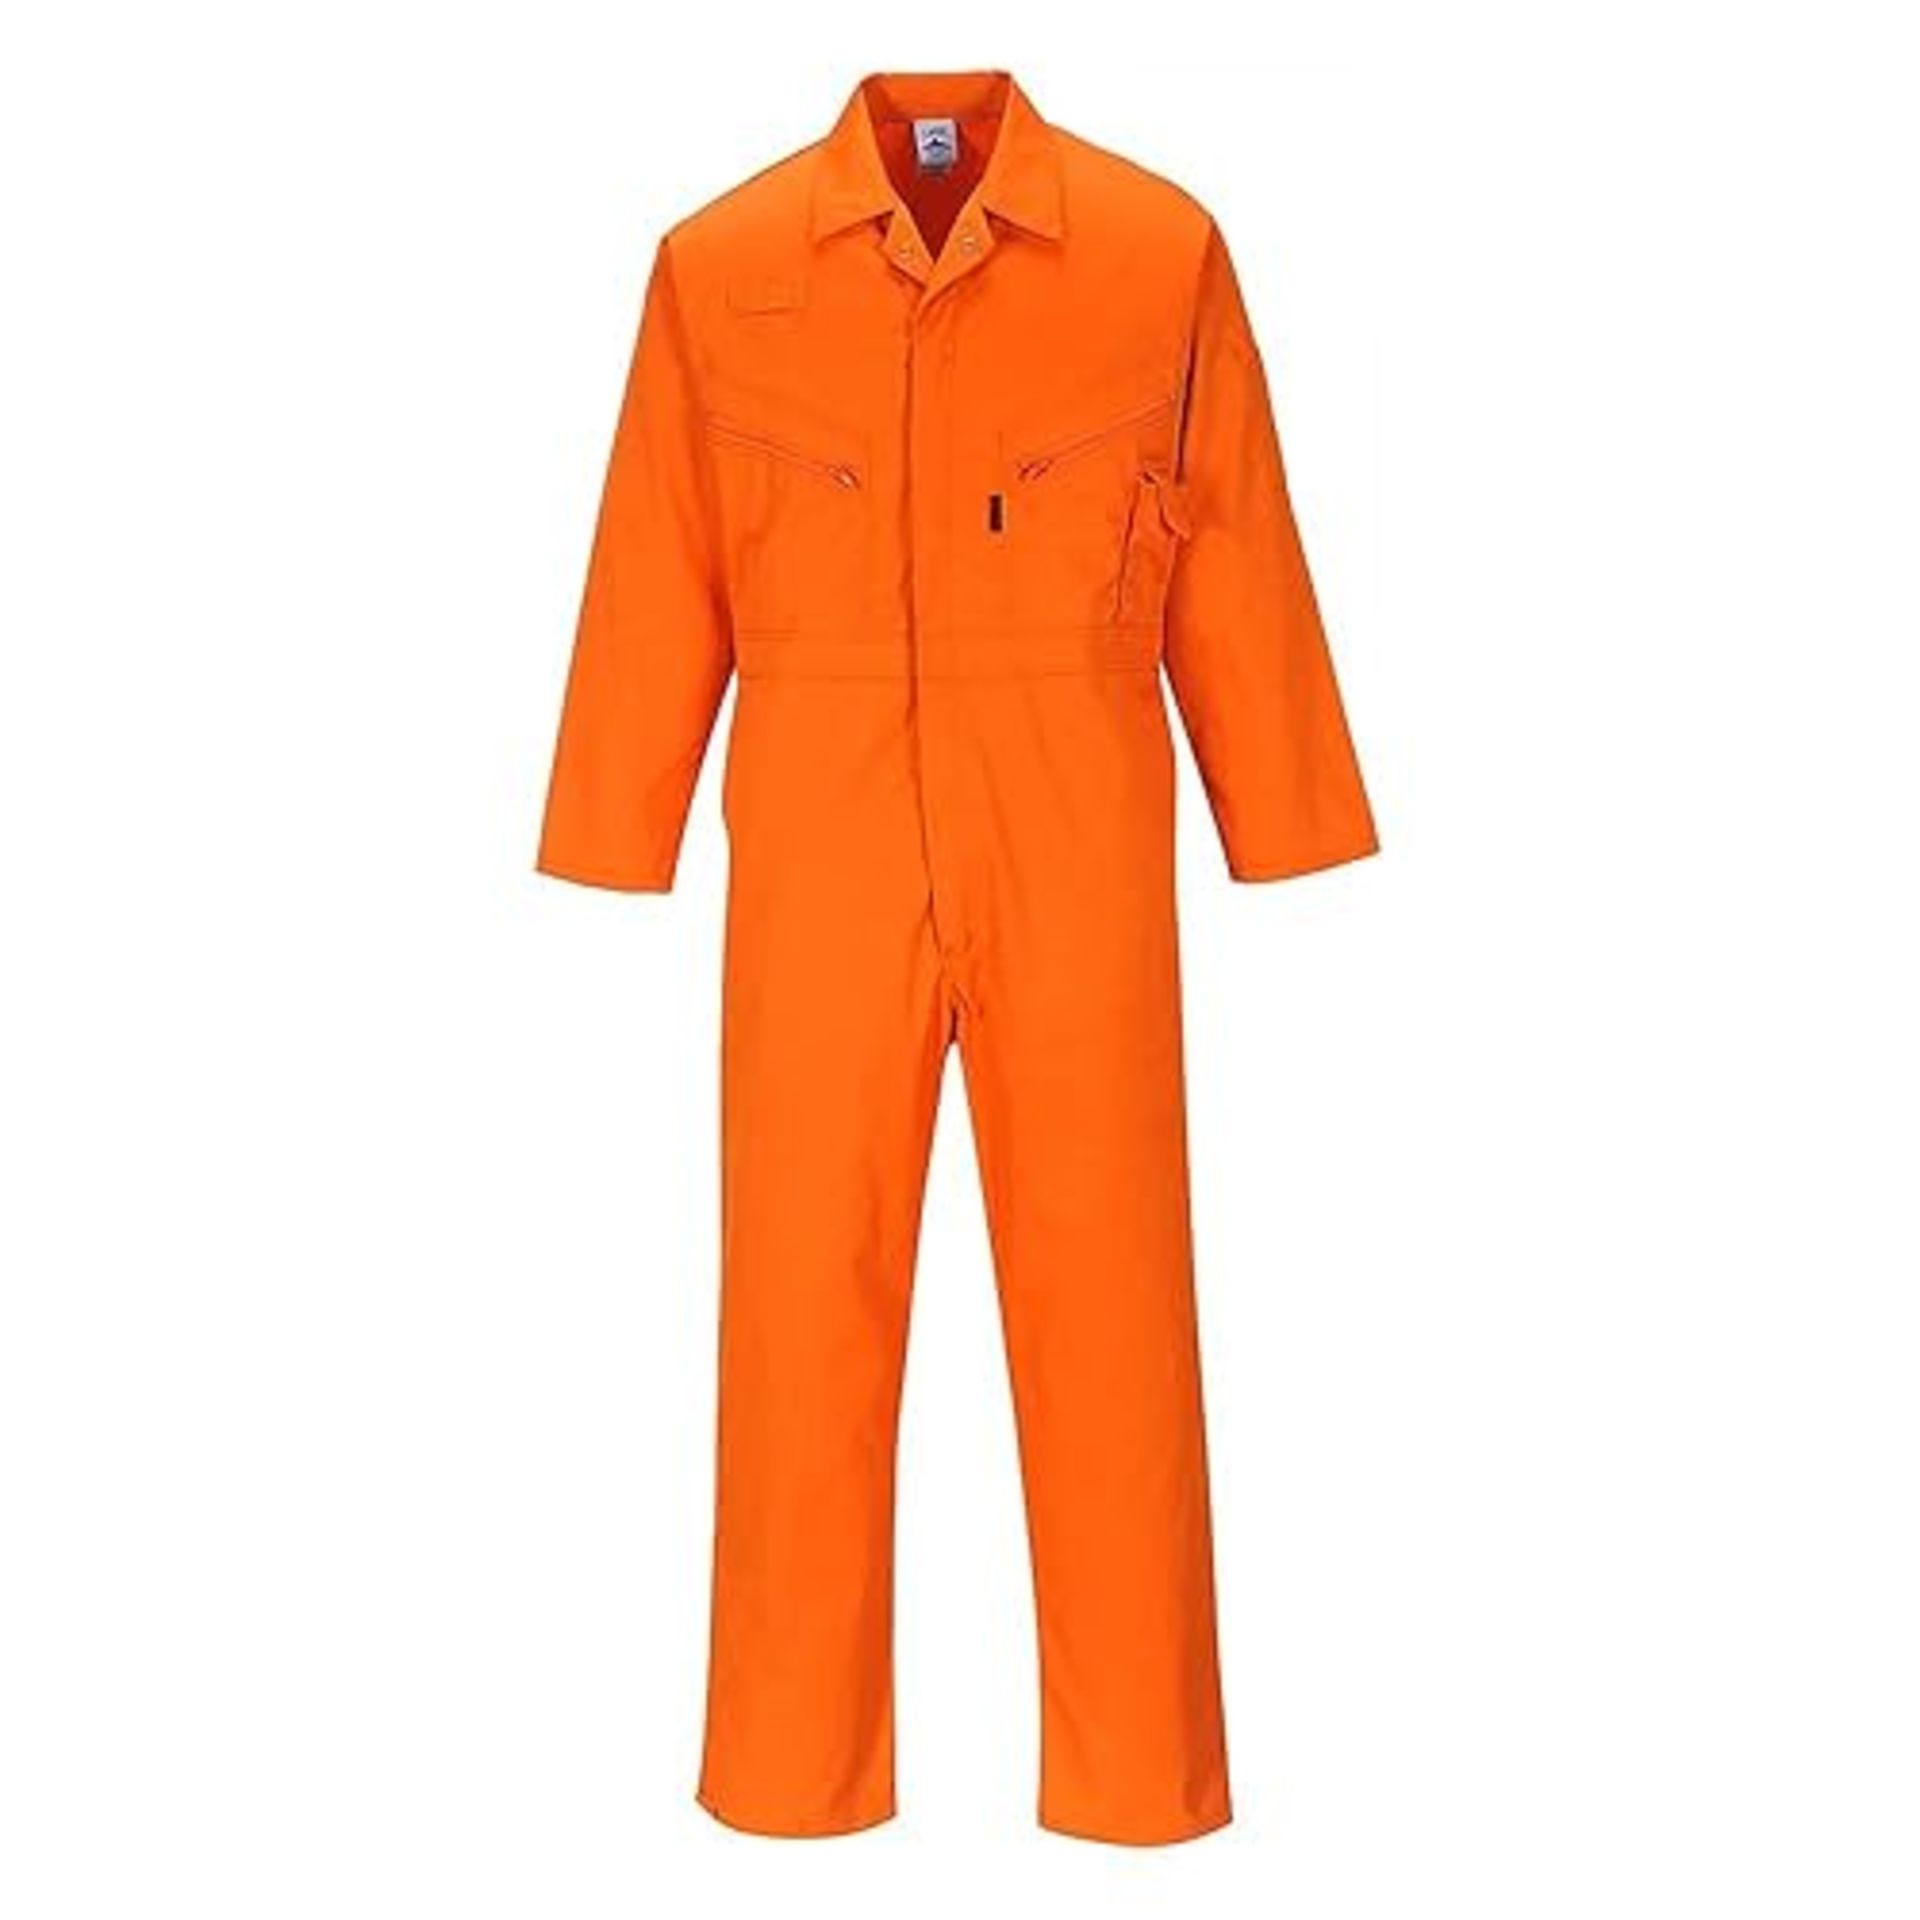 Portwest C813 Men's Liverpool Lightweight Safety Coverall Boiler Suit Overalls Orange, Large